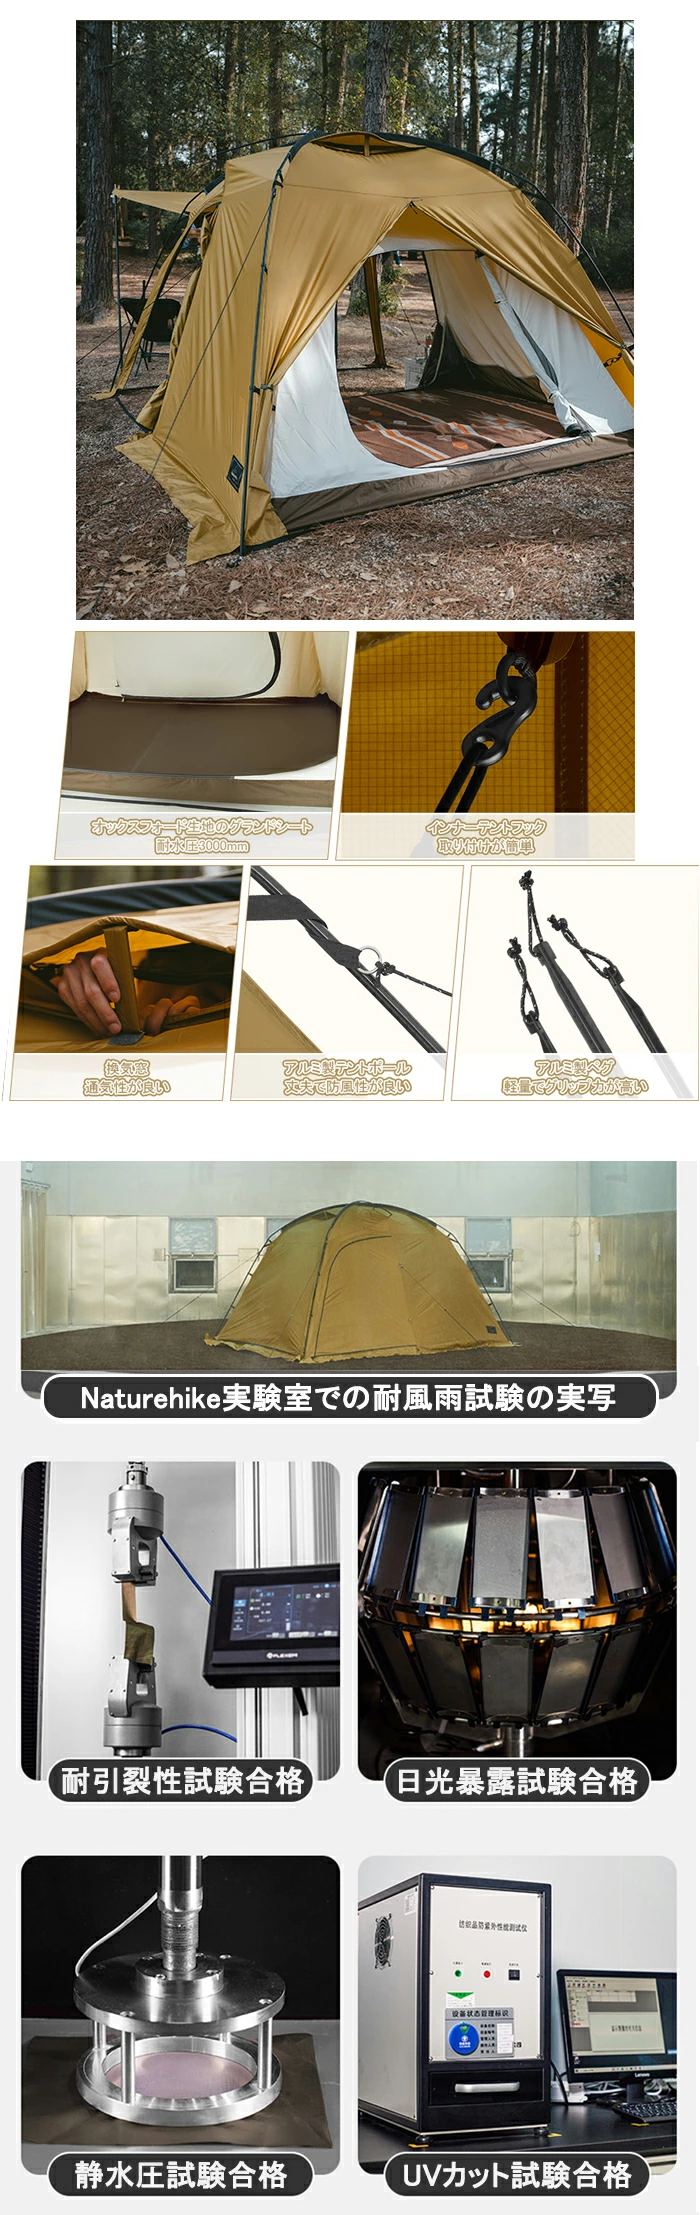 Naturehike Dune7.6ドームテント ツールーム 自立式 二重層 設営簡単 